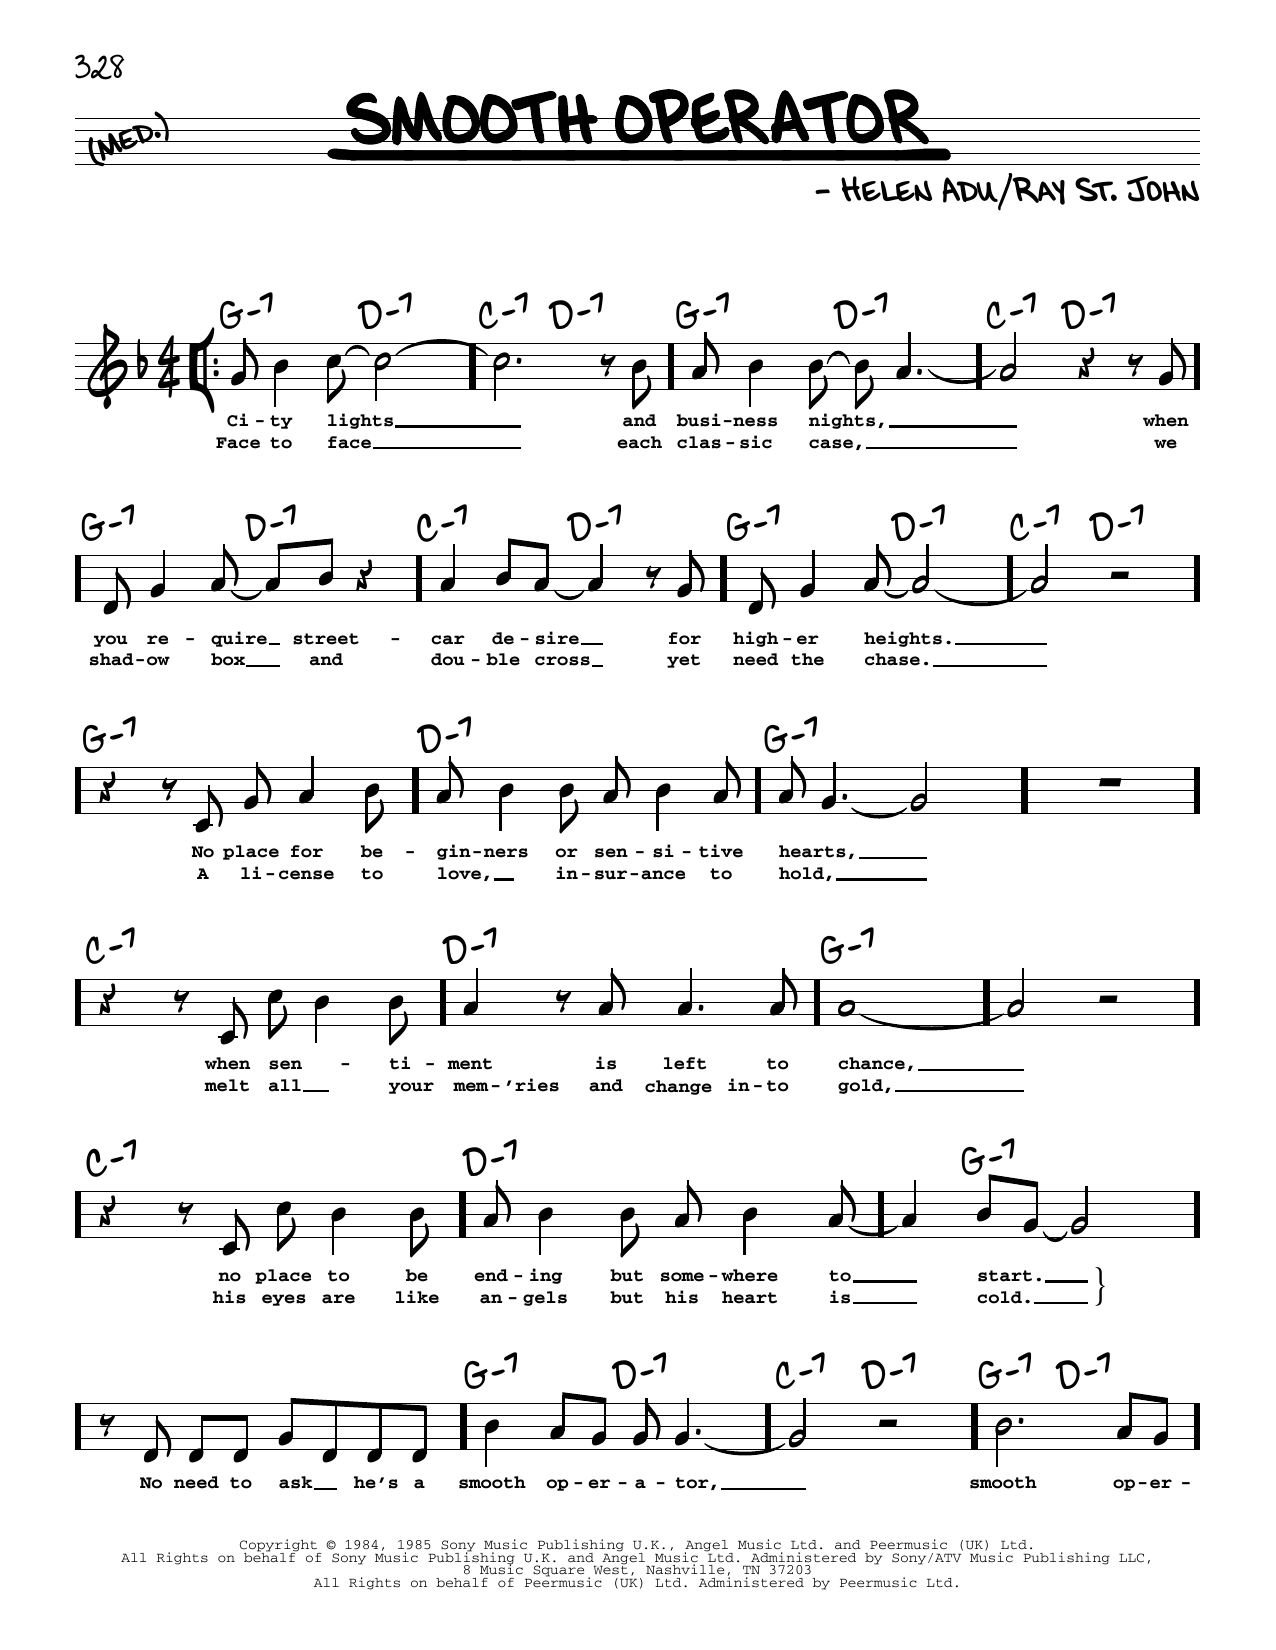 Sade Smooth Operator (High Voice) Sheet Music Notes & Chords for Real Book – Melody, Lyrics & Chords - Download or Print PDF